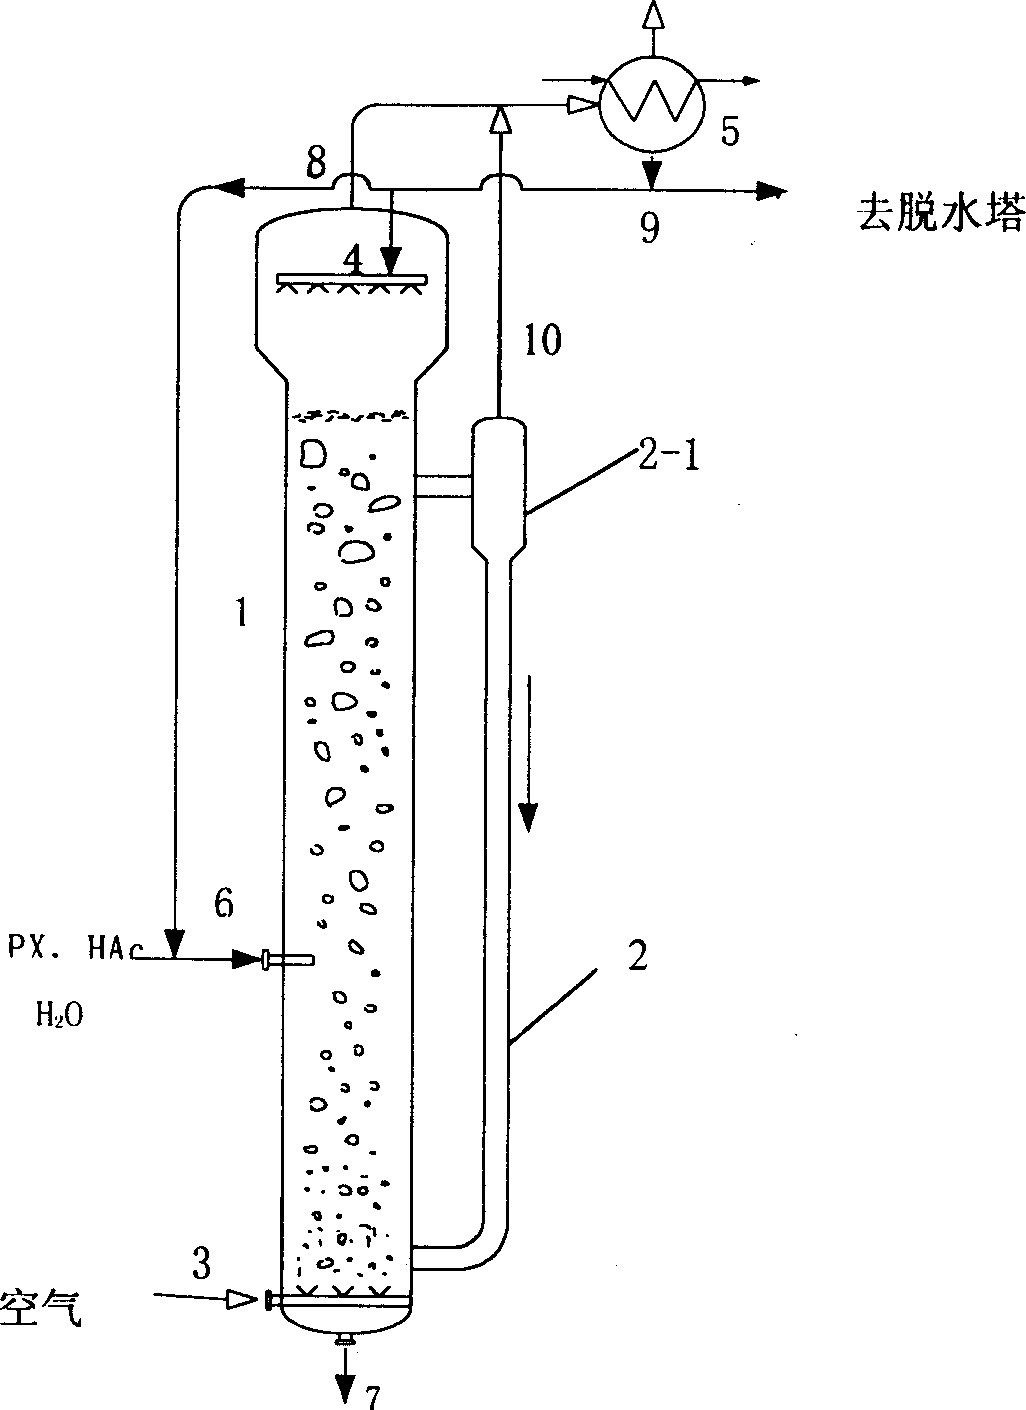 Air lift externally circulating bubble fower oxidation unit for producing terephthalic acid